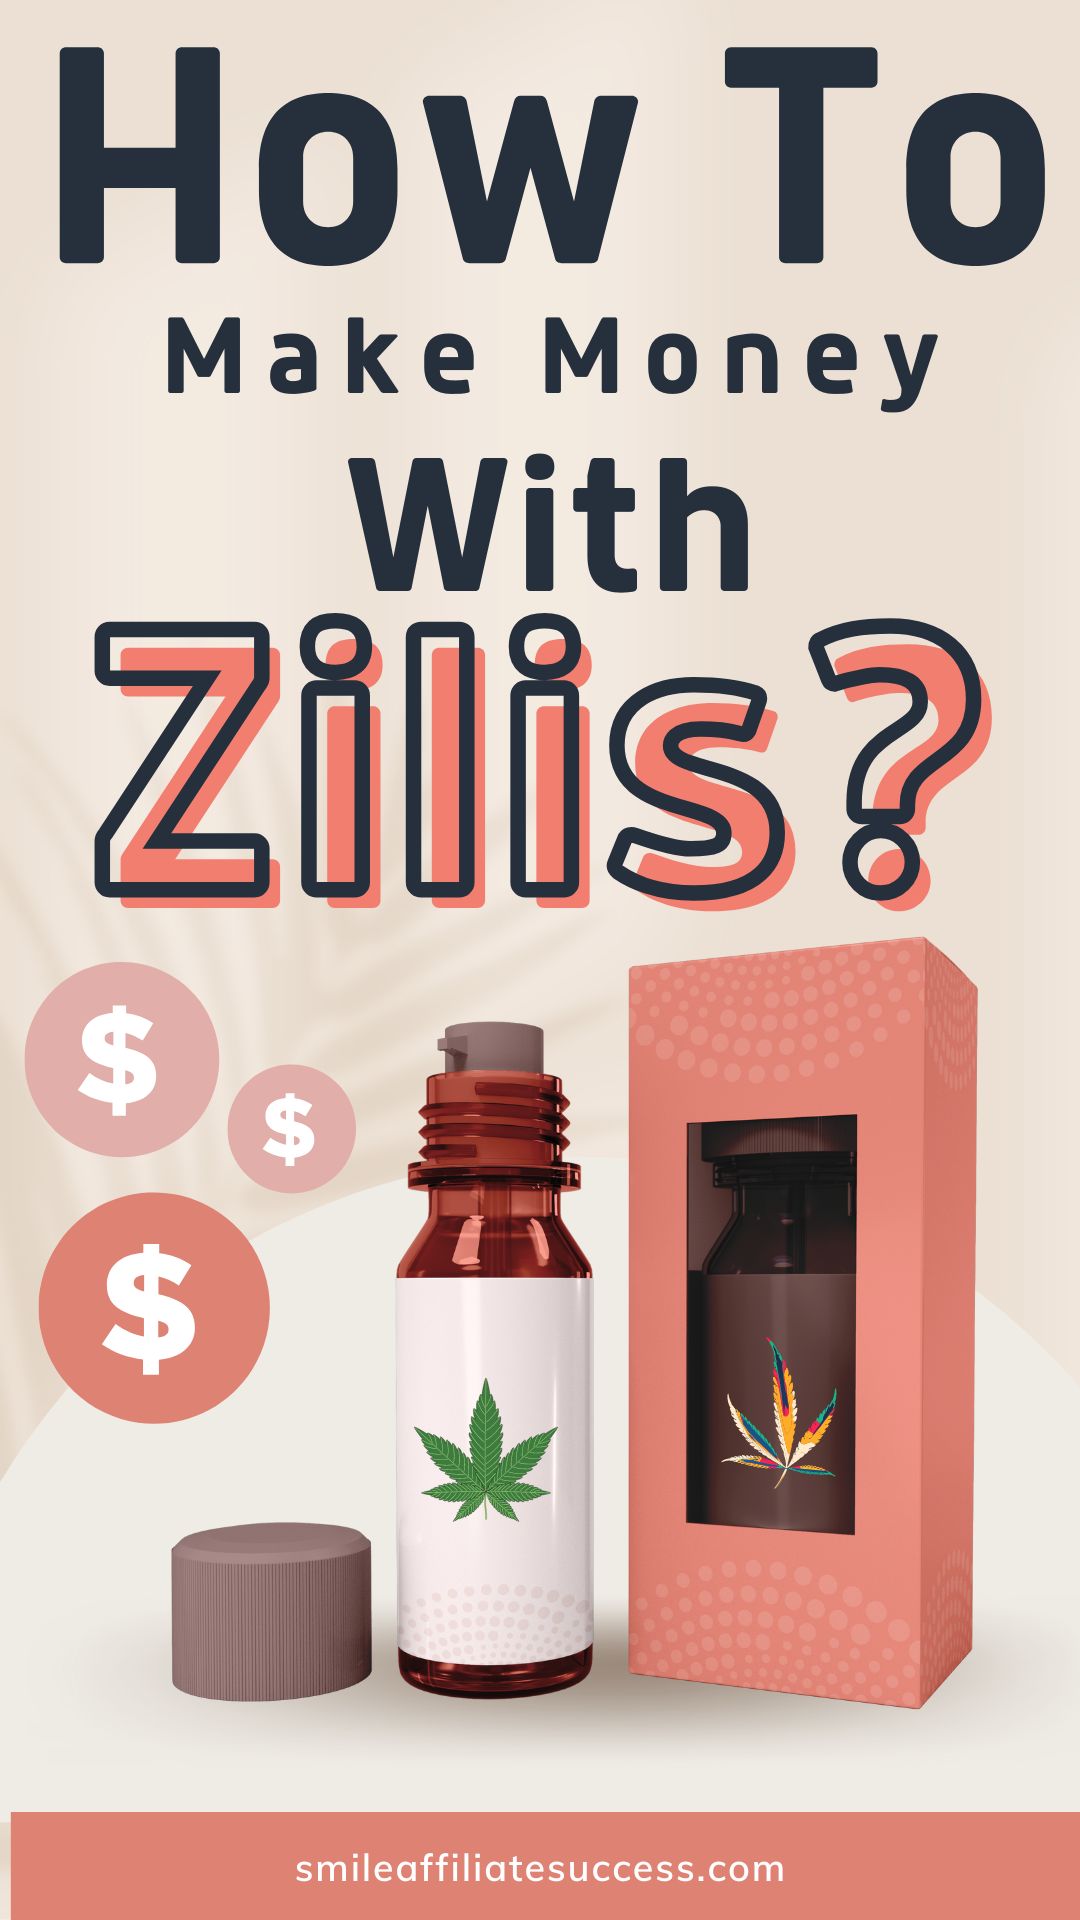 Is Zilis A Scam?